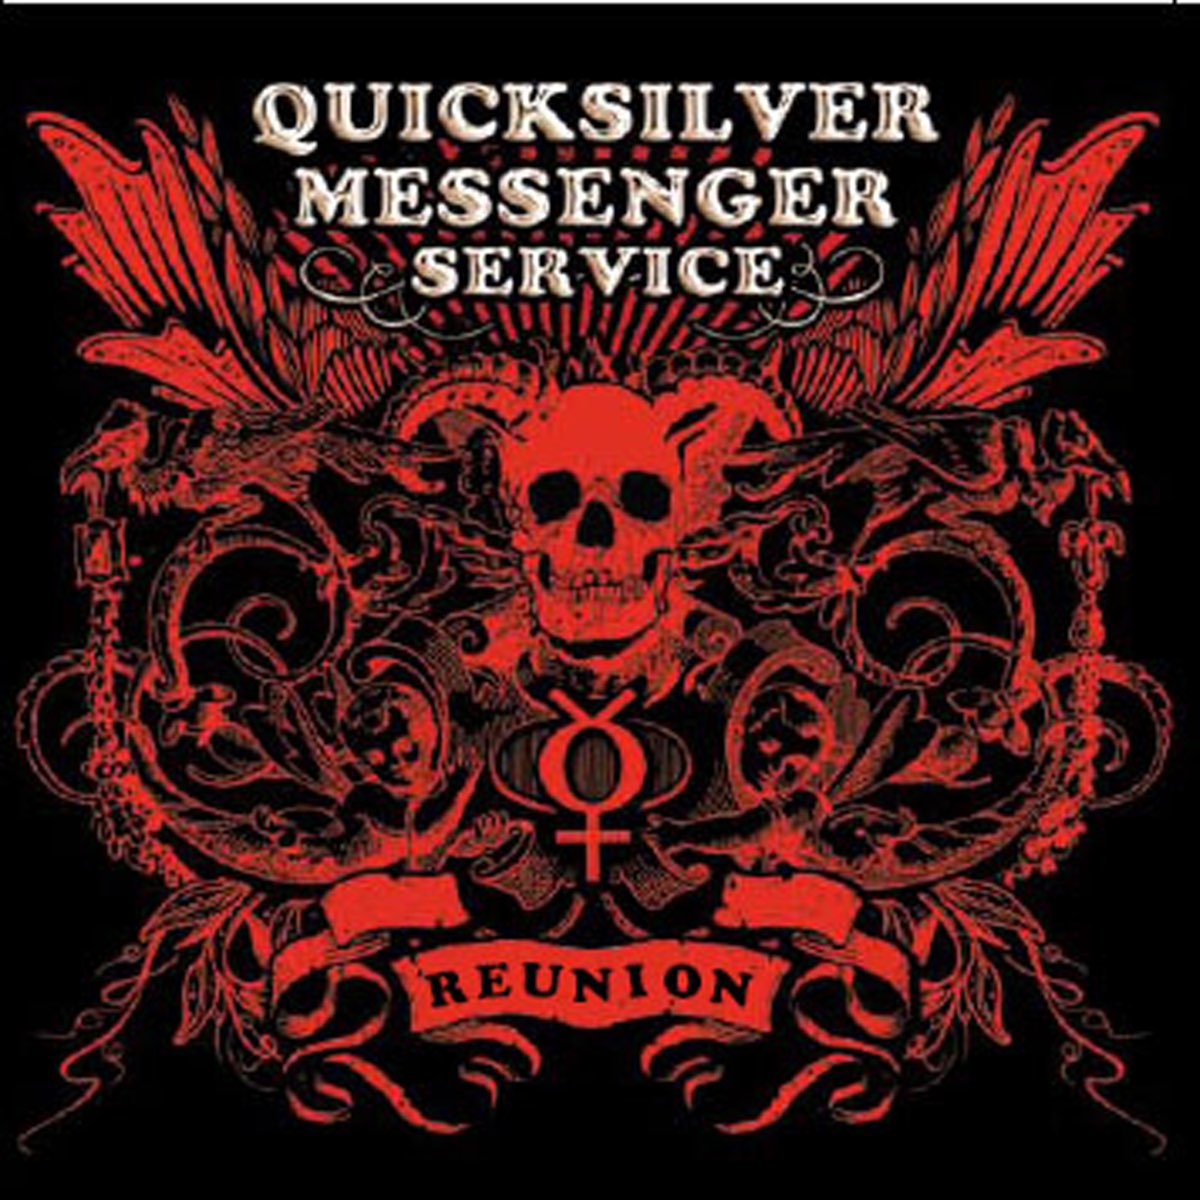 Quicksilver messenger service. Quicksilver Messenger service logo. Quicksilver Messenger service - Quicksilver Messenger service (1968). Quicksilver Messenger service - who do you Love Suite, who do you Love (Part 1).